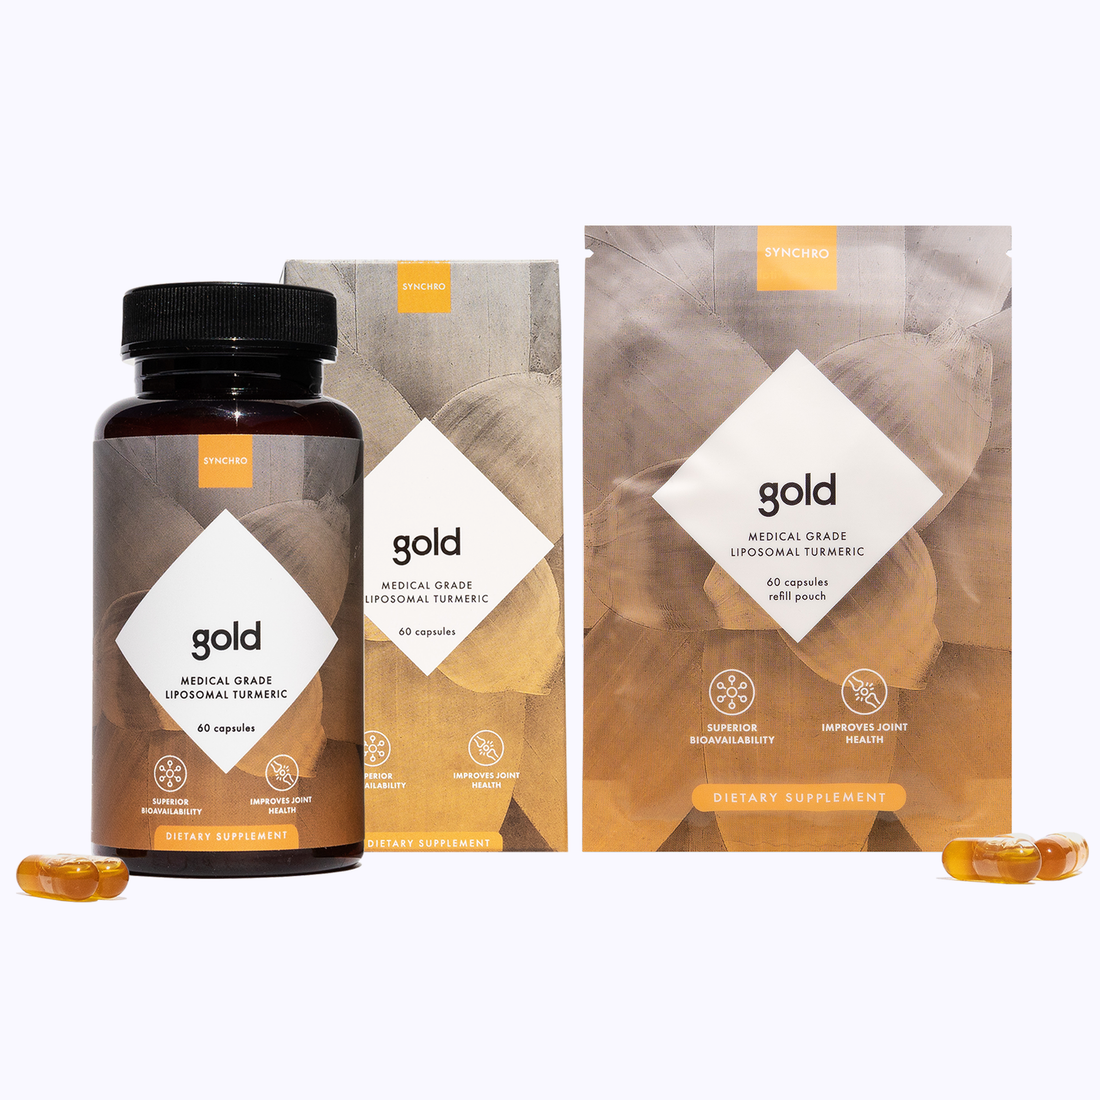 Curcuma Gold BIO 60 gélules - Inflammation, digestion